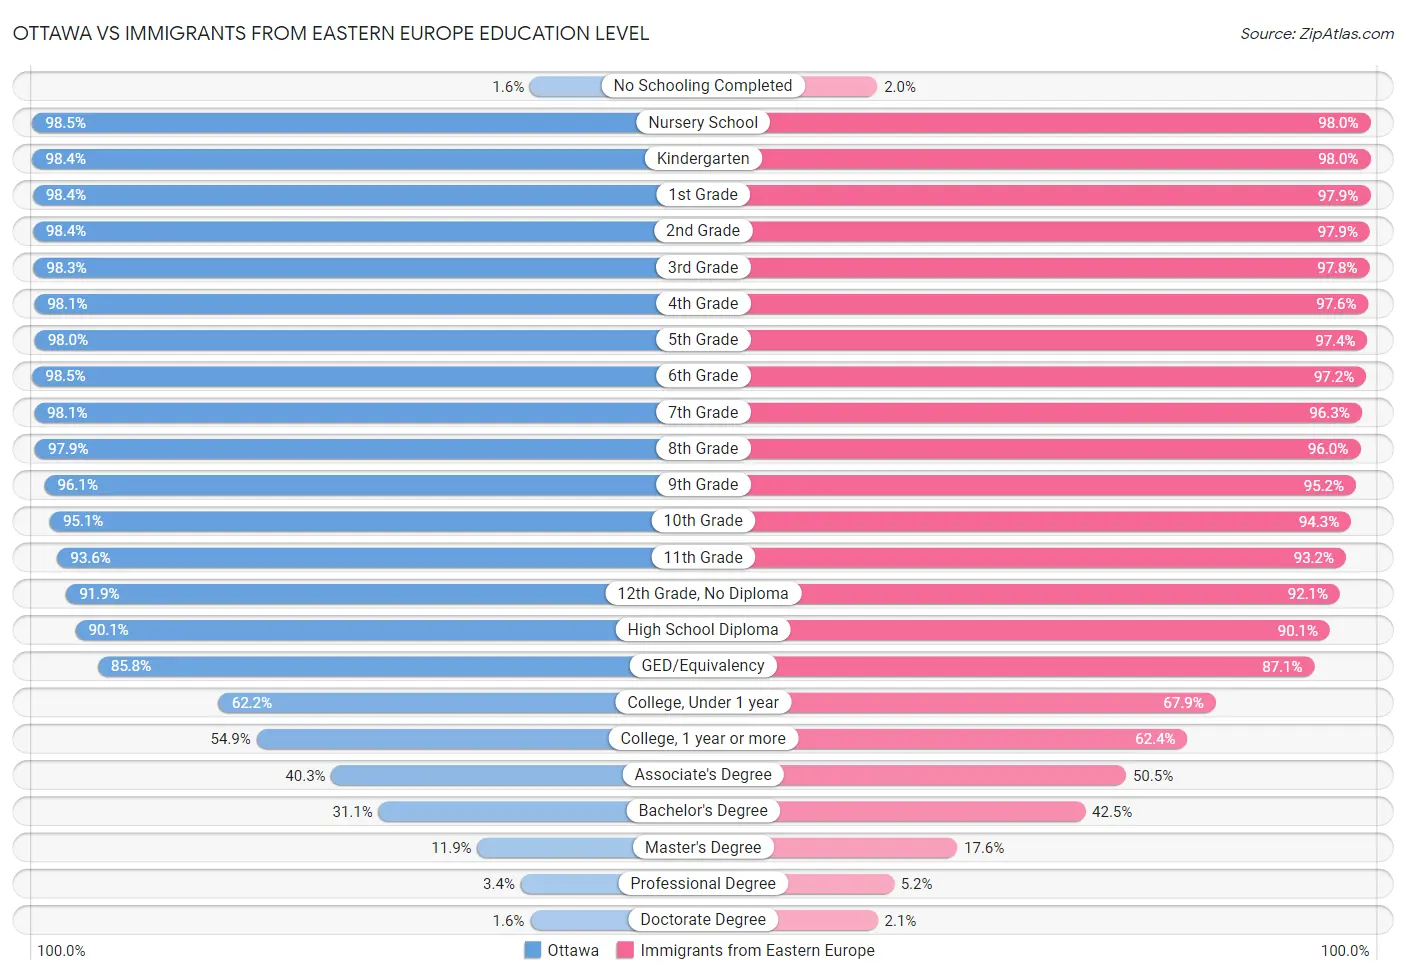 Ottawa vs Immigrants from Eastern Europe Education Level